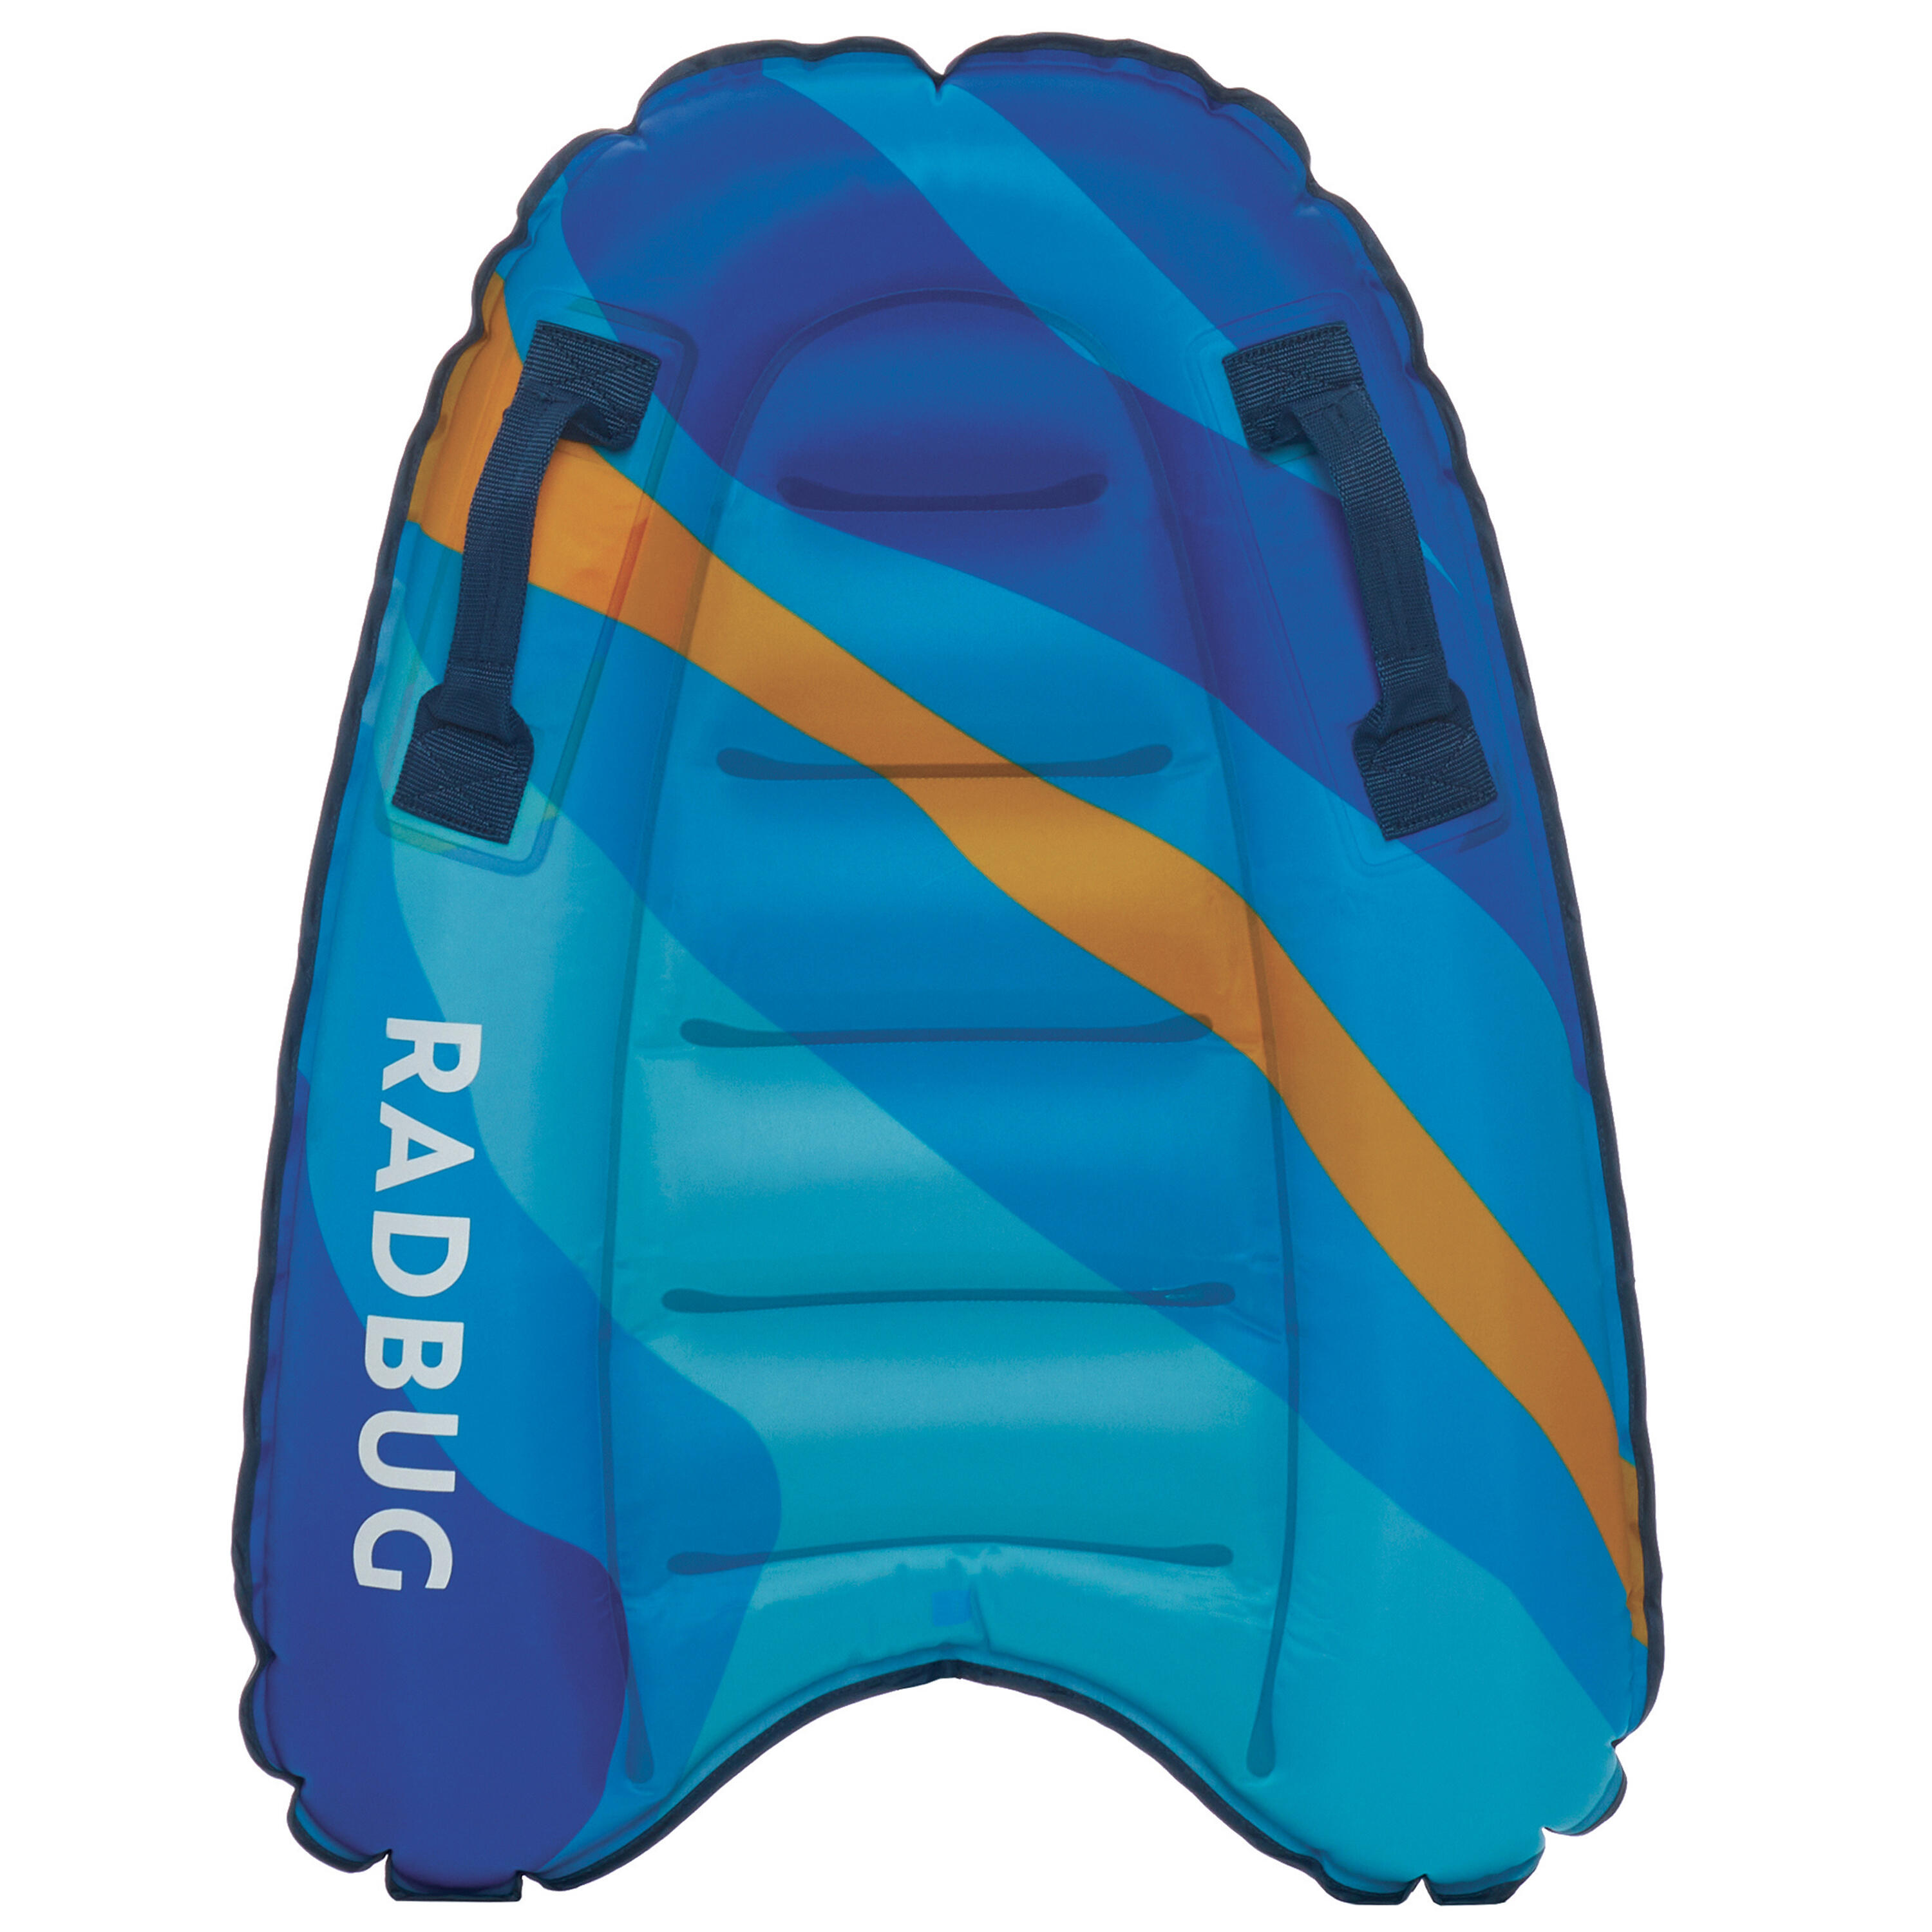 Bodyboard gonflabilă DISCOVERY Albastru-Galben Copii 4-8 ani (15-25 kg) RADBUG decathlon.ro